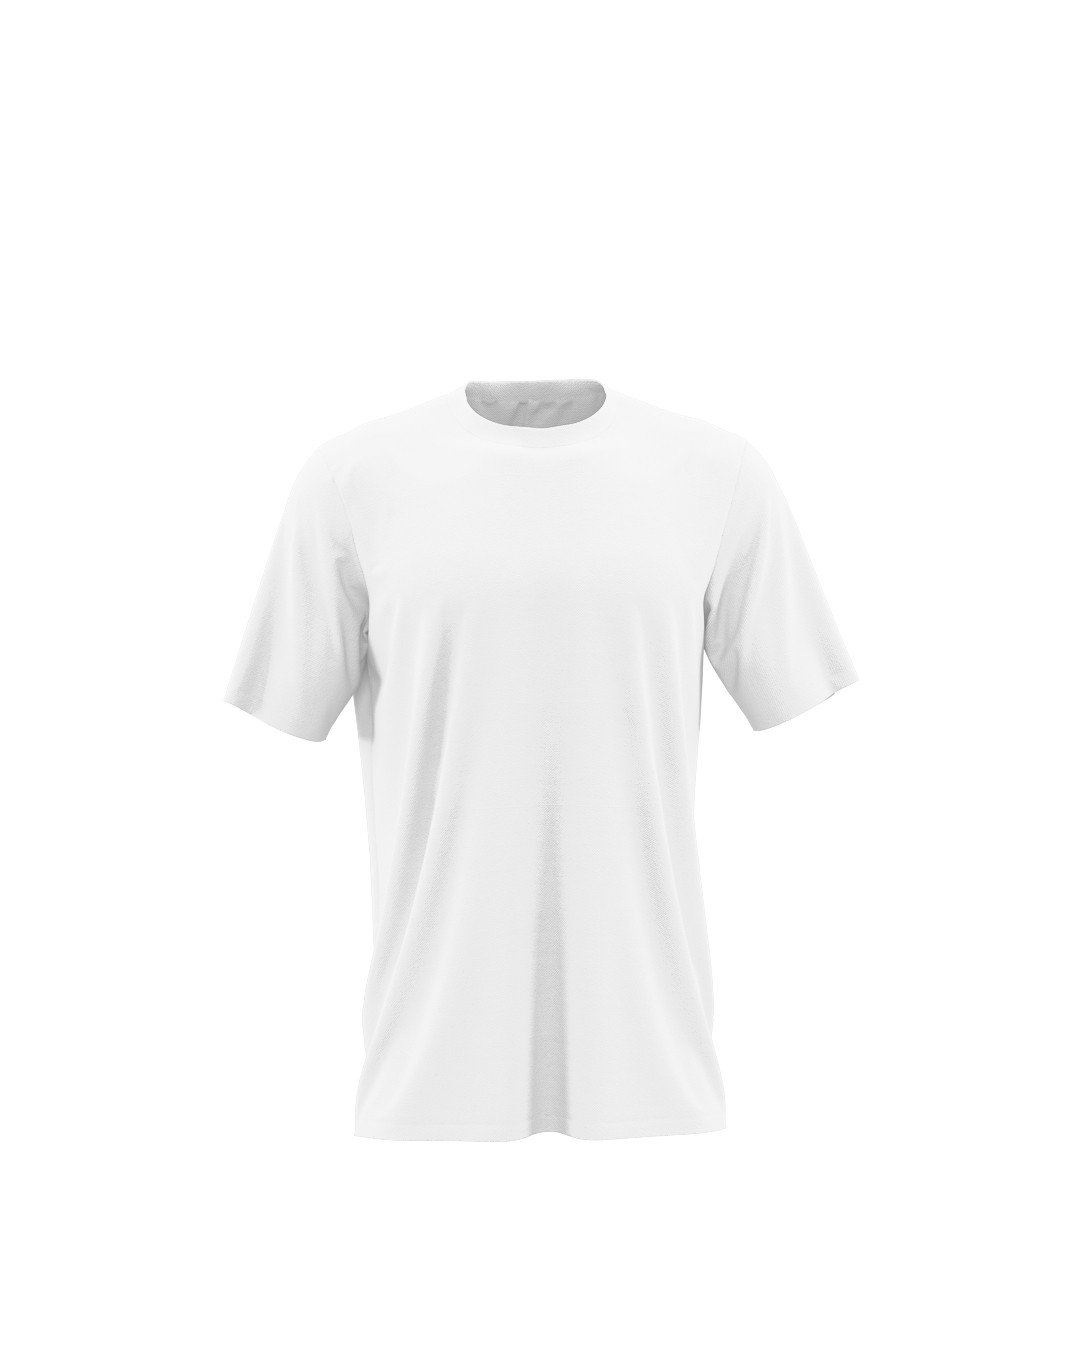 Plain Round Neck Bio-washed Super Combed White Cotton T-Shirt